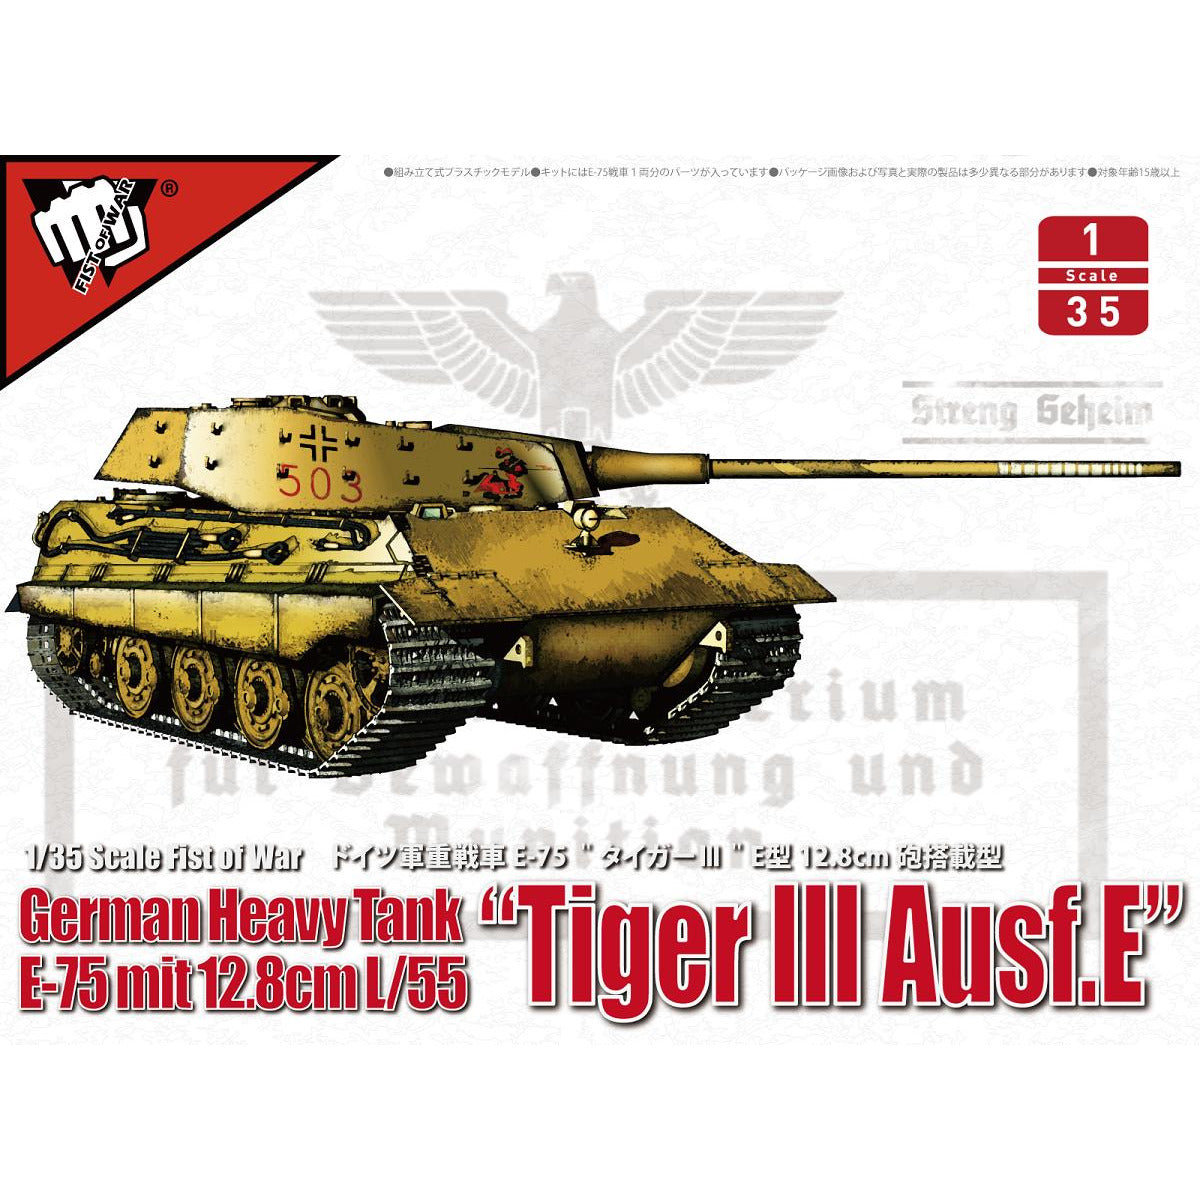 Tigerzahn German Heavy Tank E-75 Ausf. E Tiger III 12.8cmL/55 1/35 #UA35016 by Fist of War